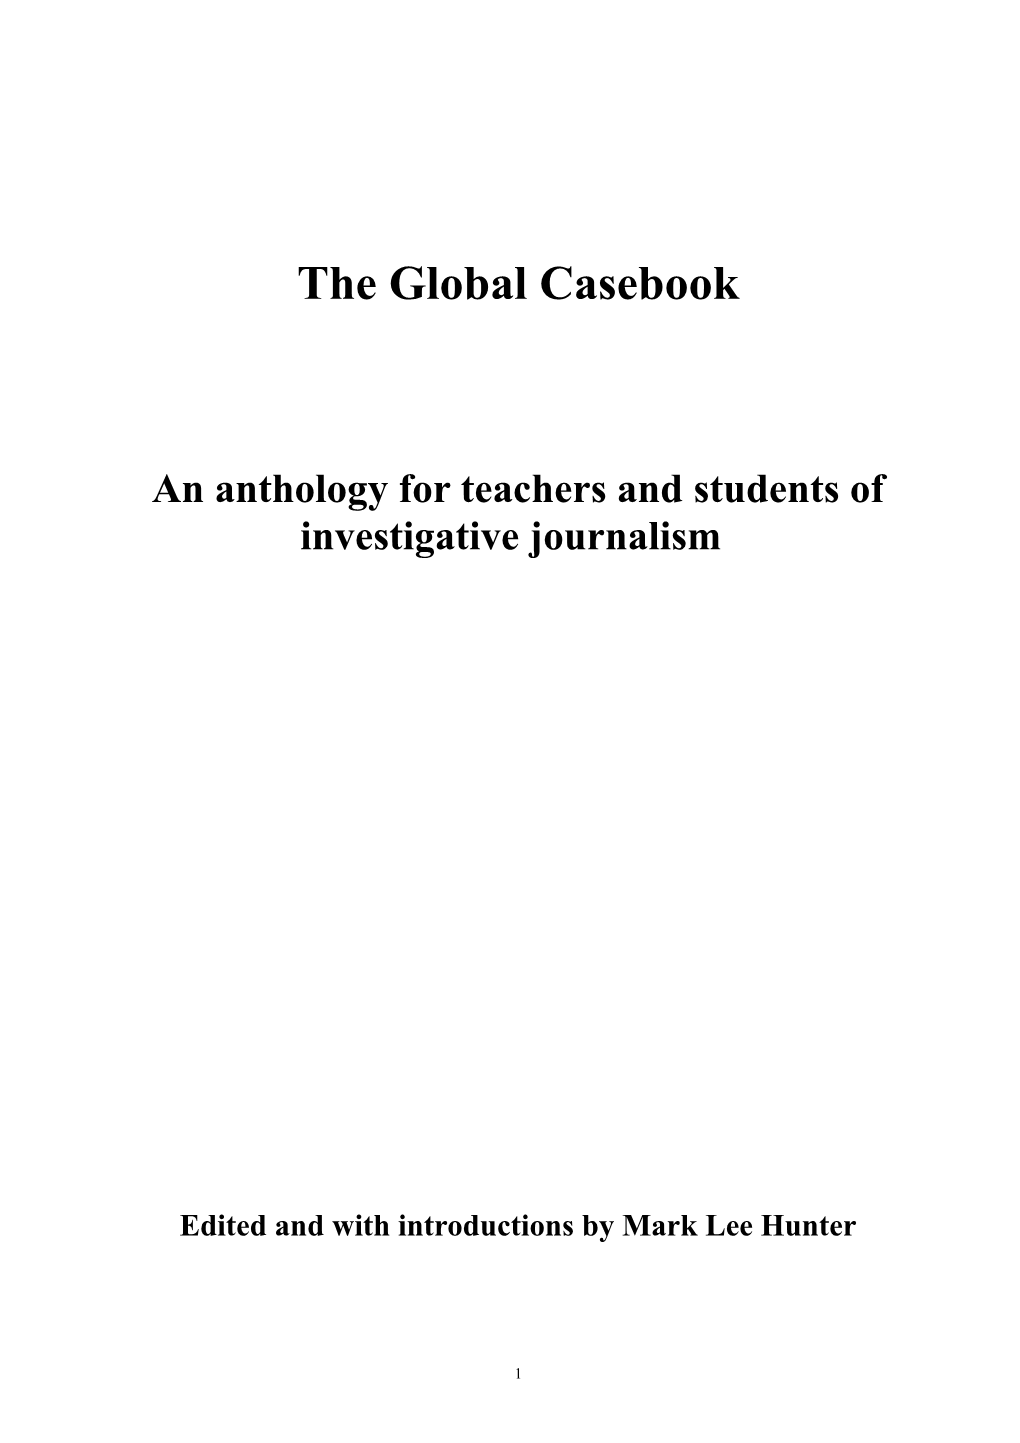 The Global Casebook